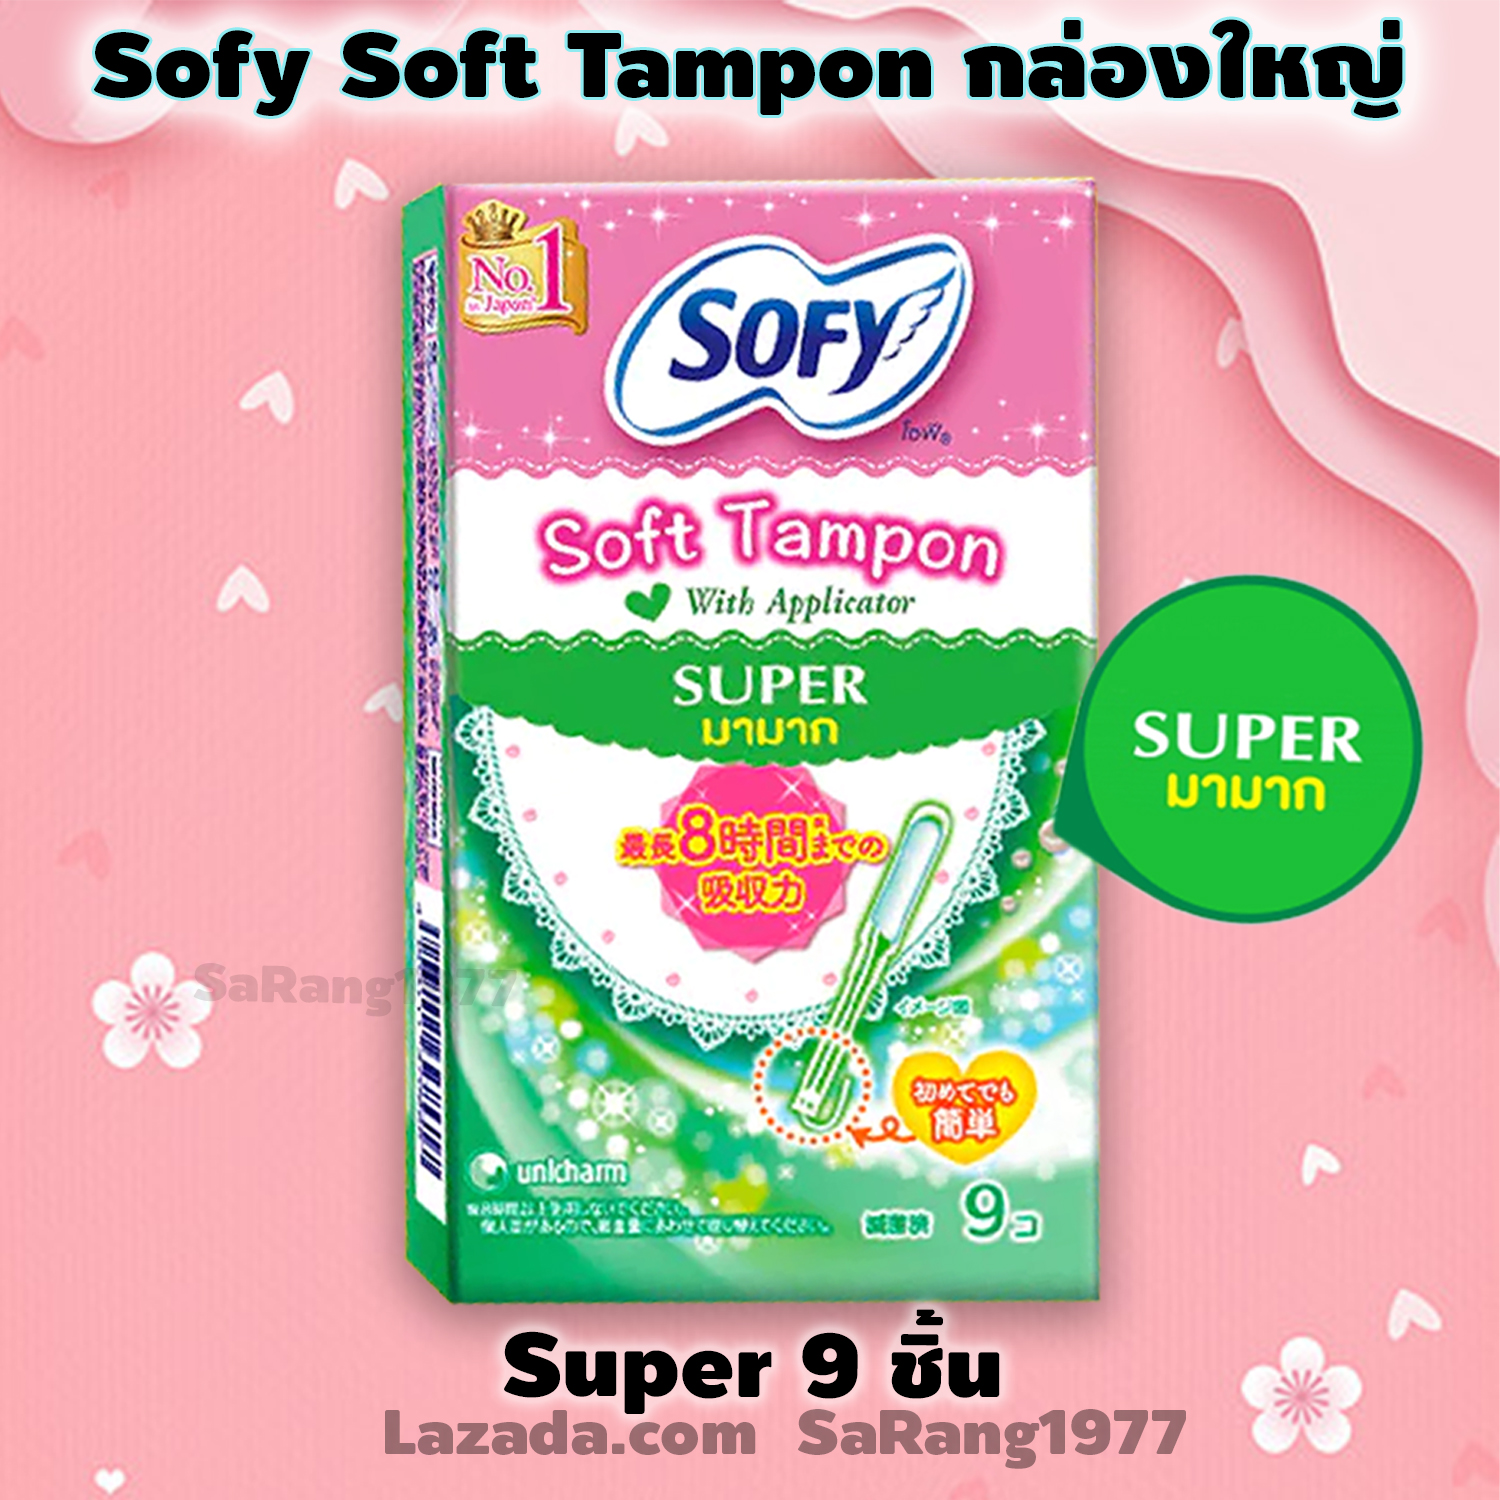 Sofy Soft Tampon with Applicator ผ้าอนามัยแบบสอดกล่องใหญ่ สำหรับวันมามาก Super รุ่น 9 ชิ้น